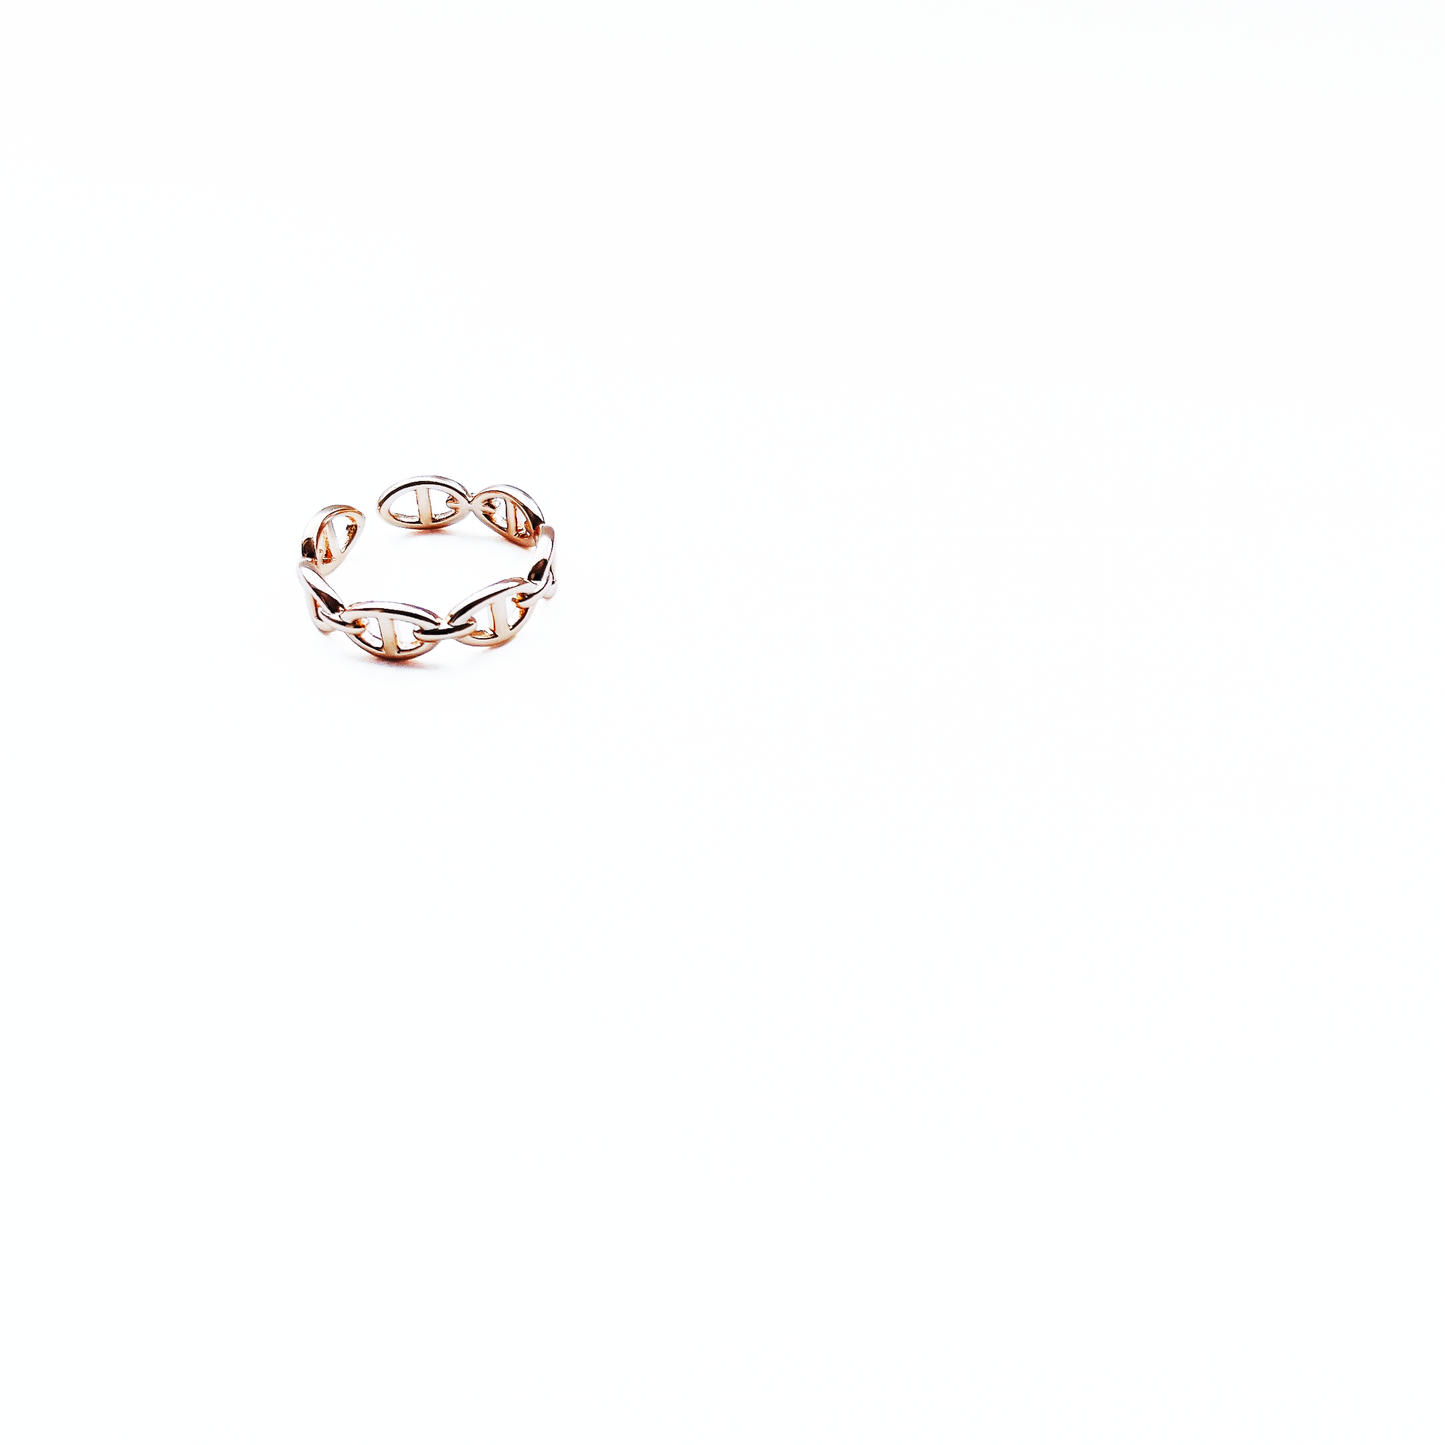 Adjustable pink gold sculpture ring inspired by Hermes Chaîne d'ancre Enchaînée, exuding elegance and luxury.